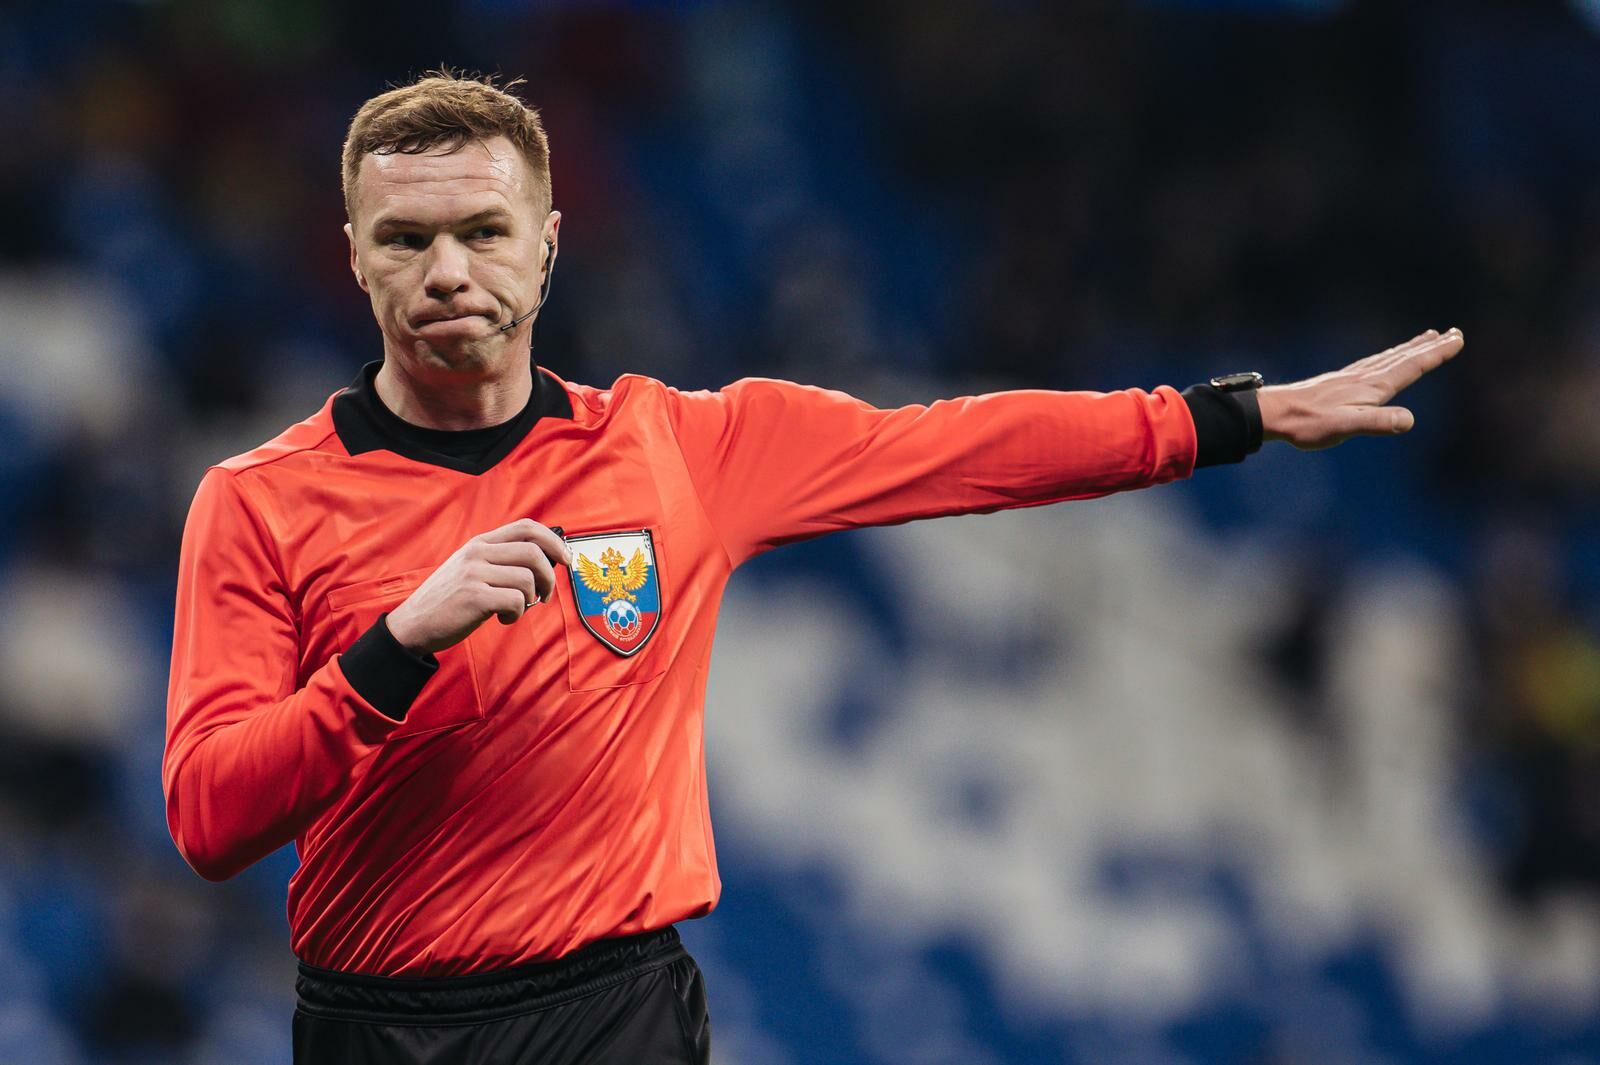 Alexey Amelin to referee Ural vs Dynamo RPL game